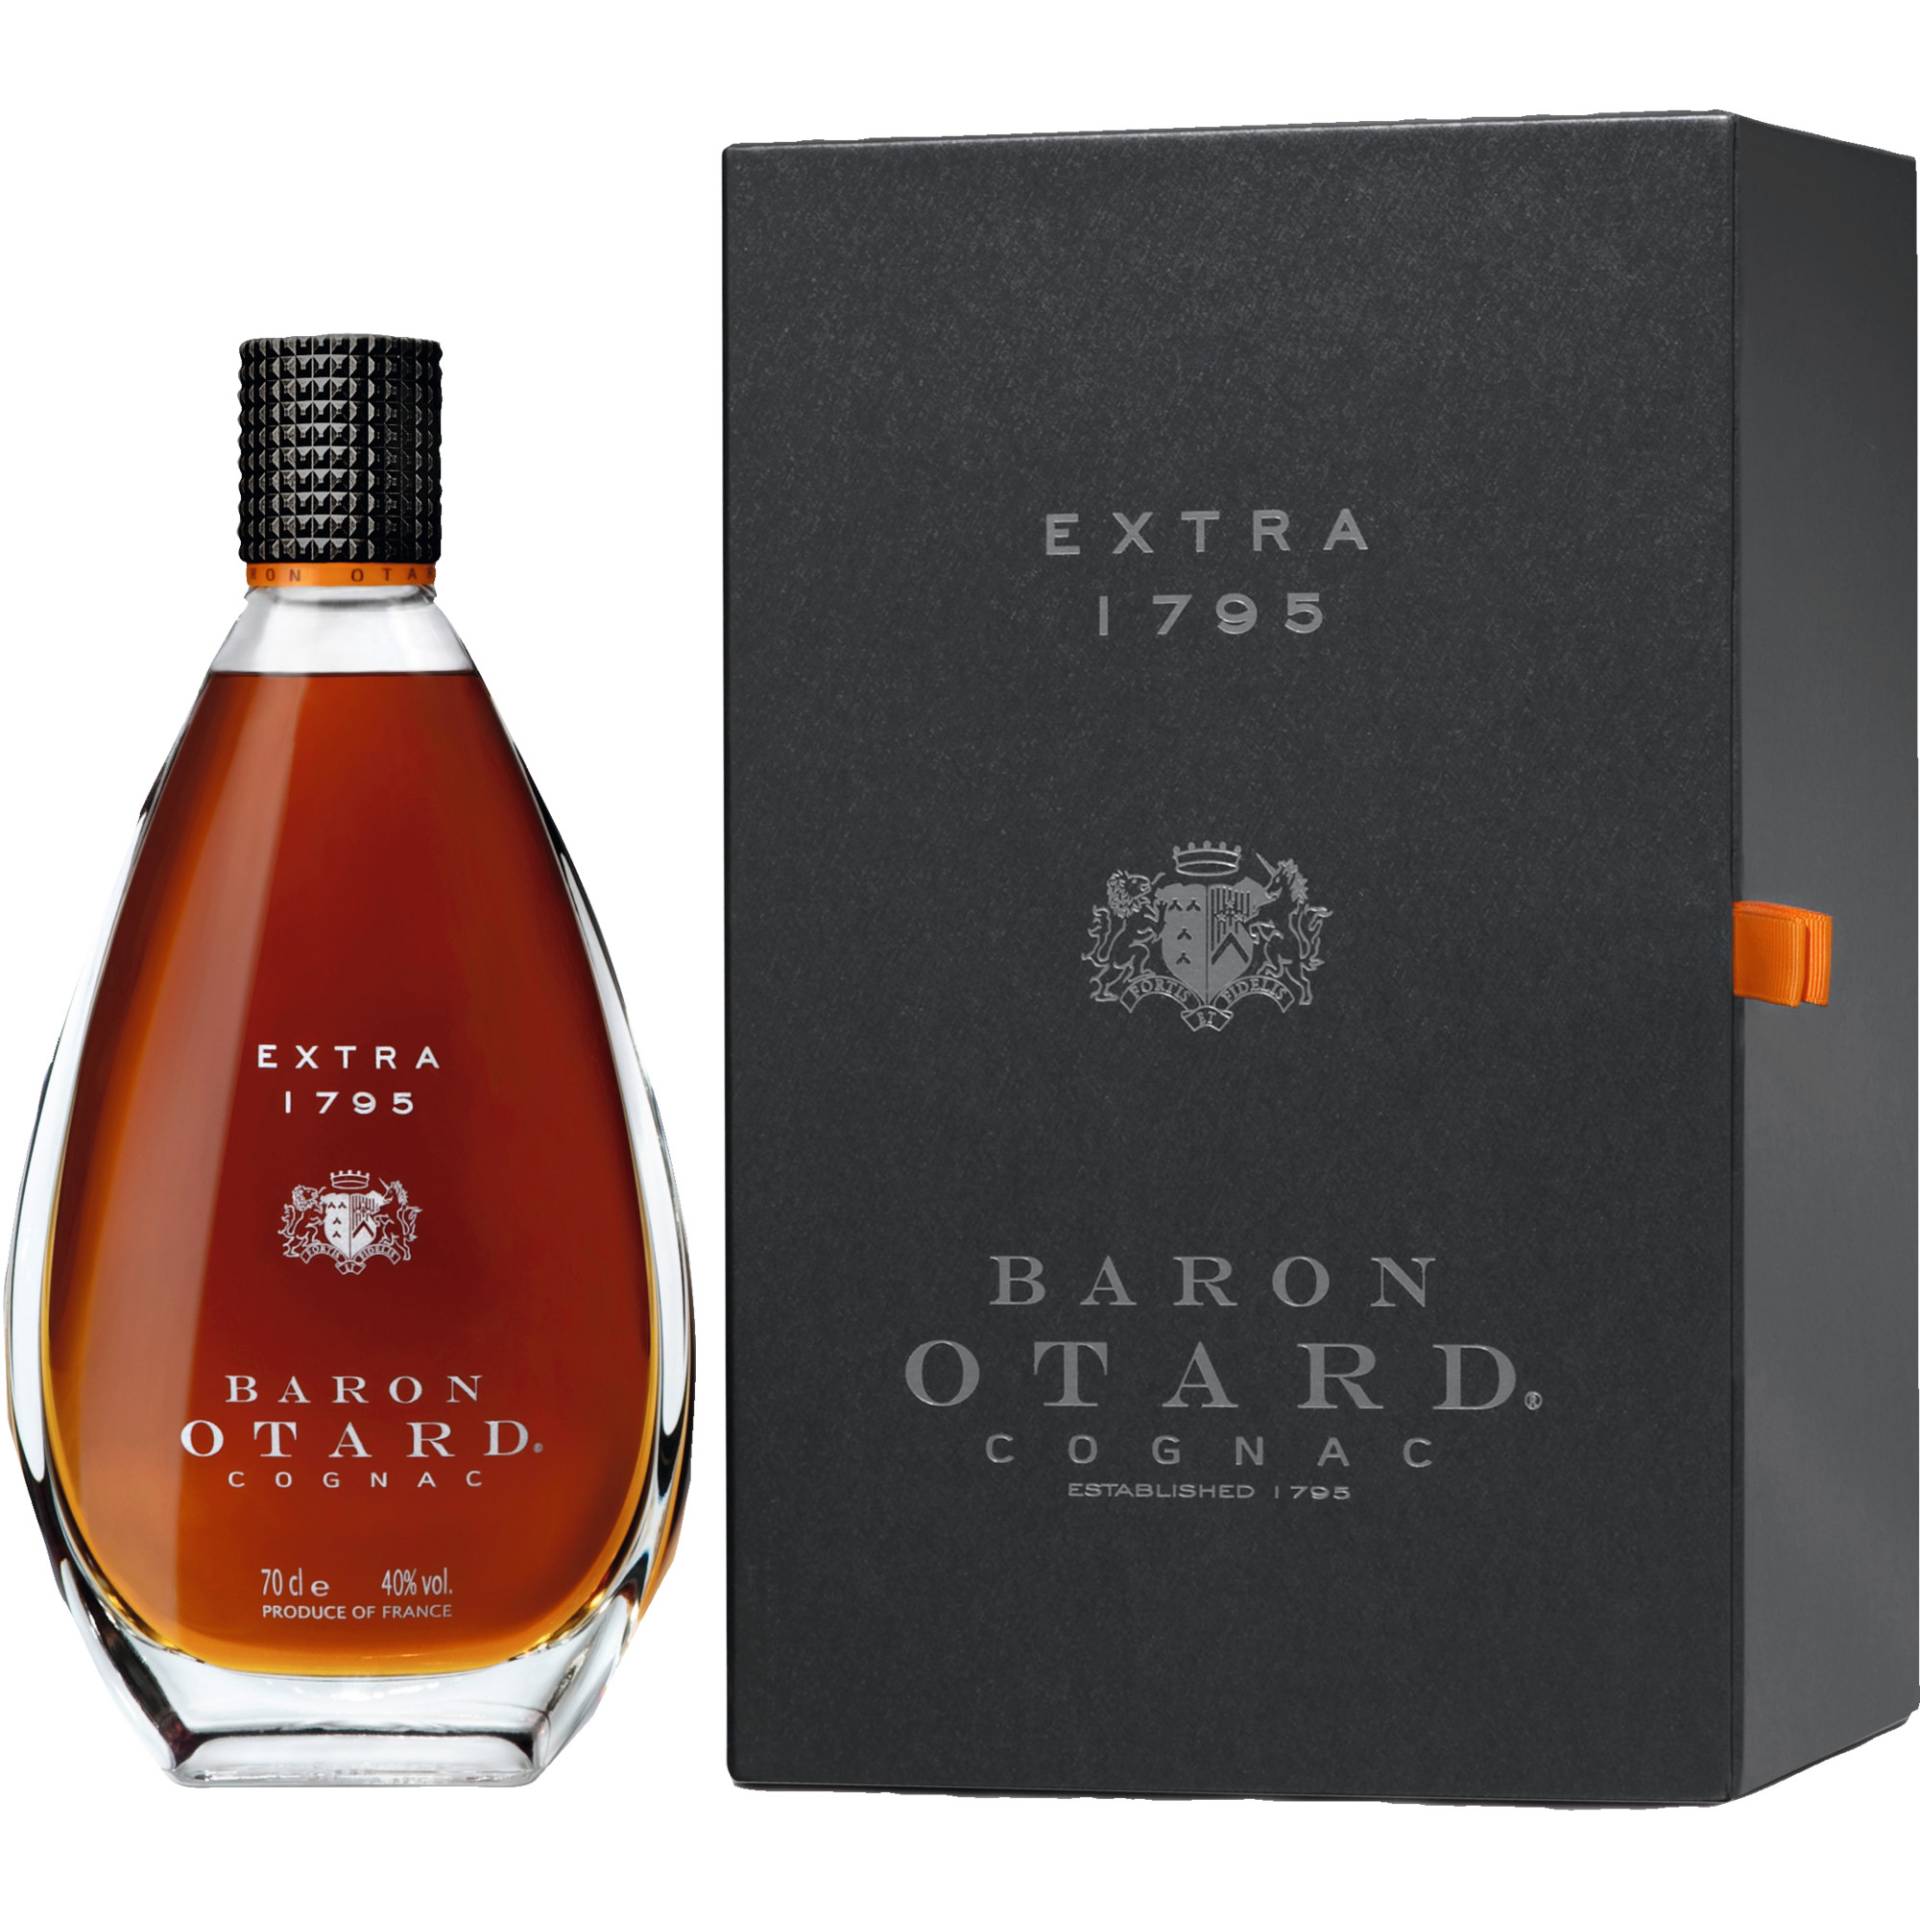 Baron Otard Extra 1795, Cognac, 0,7 L, 40% Vol., Spirituosen von BACARDI GmbH , Hindenburgstr. 49 , D-22297 Hamburg